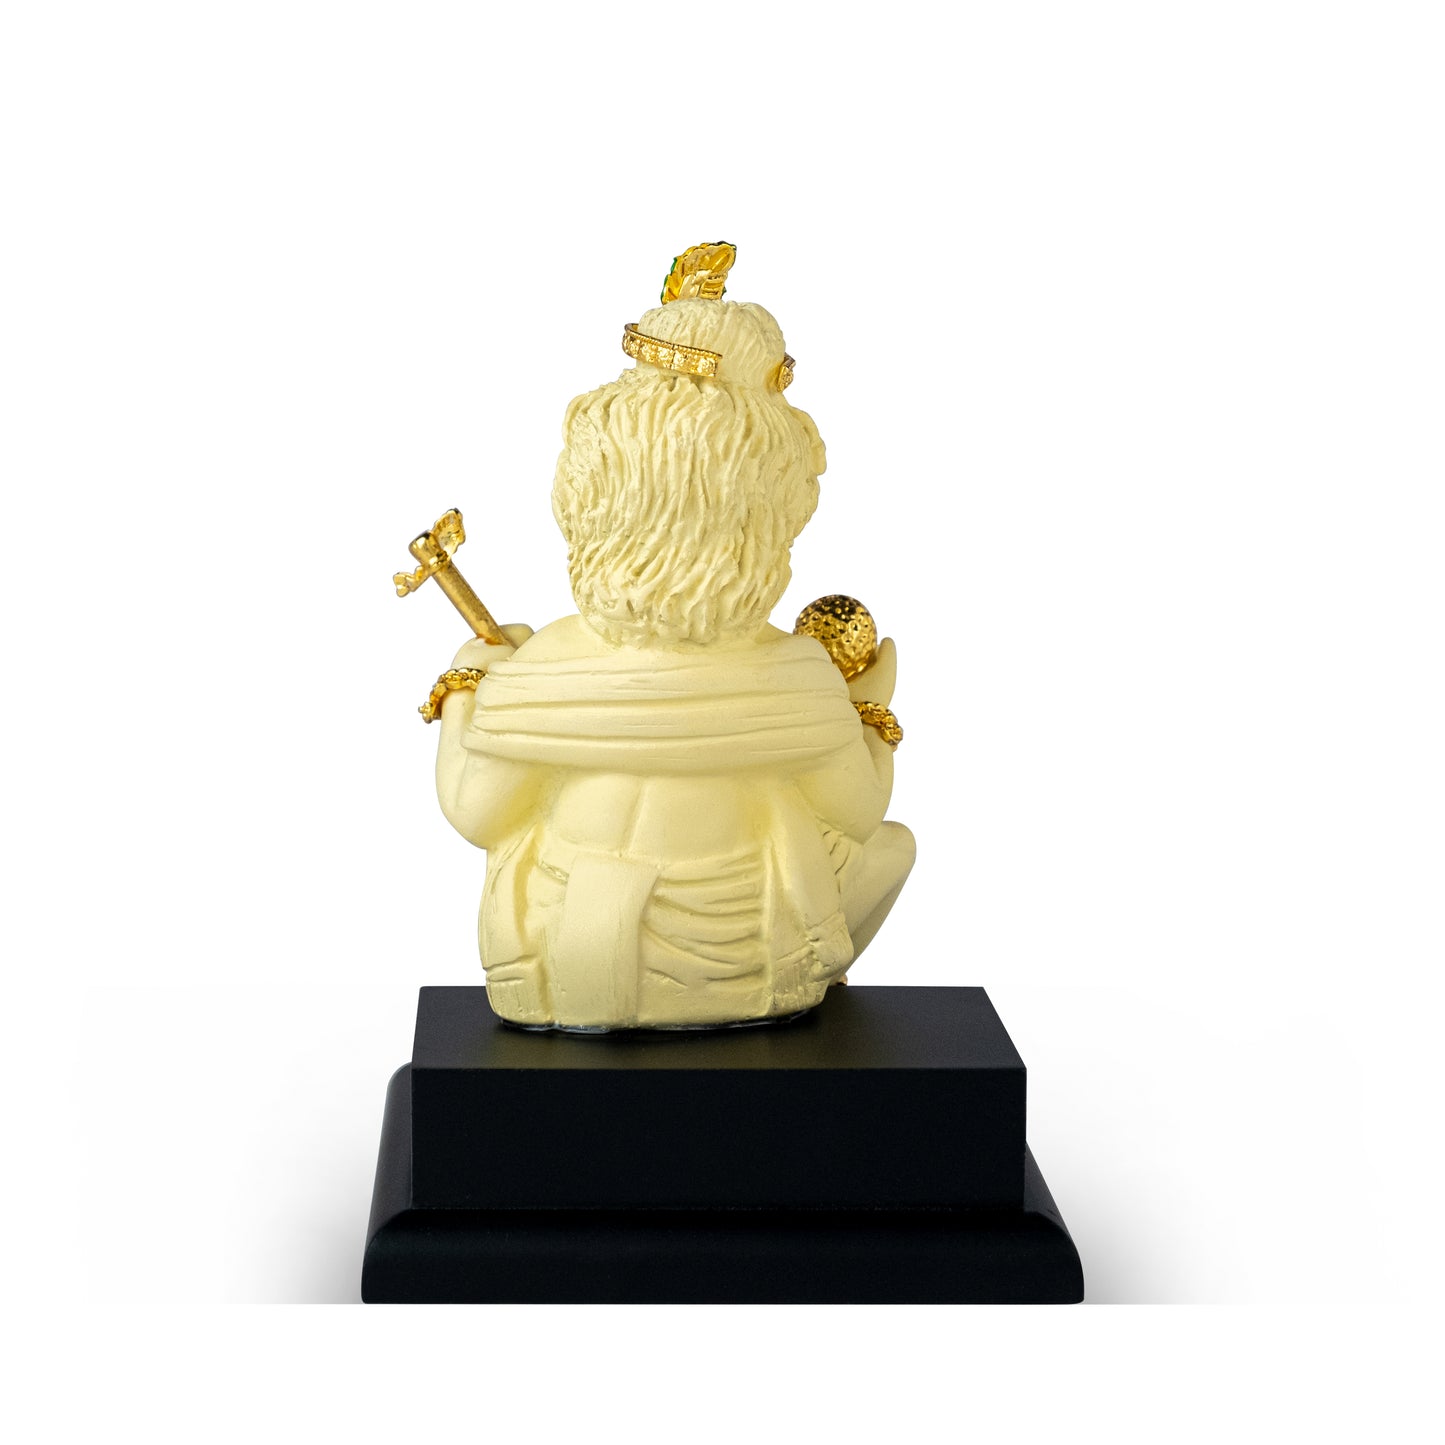 Laddoo Gopal with Flute Idol | Bal Gopal Murti |  Little Kanha Figurine for Home Temple